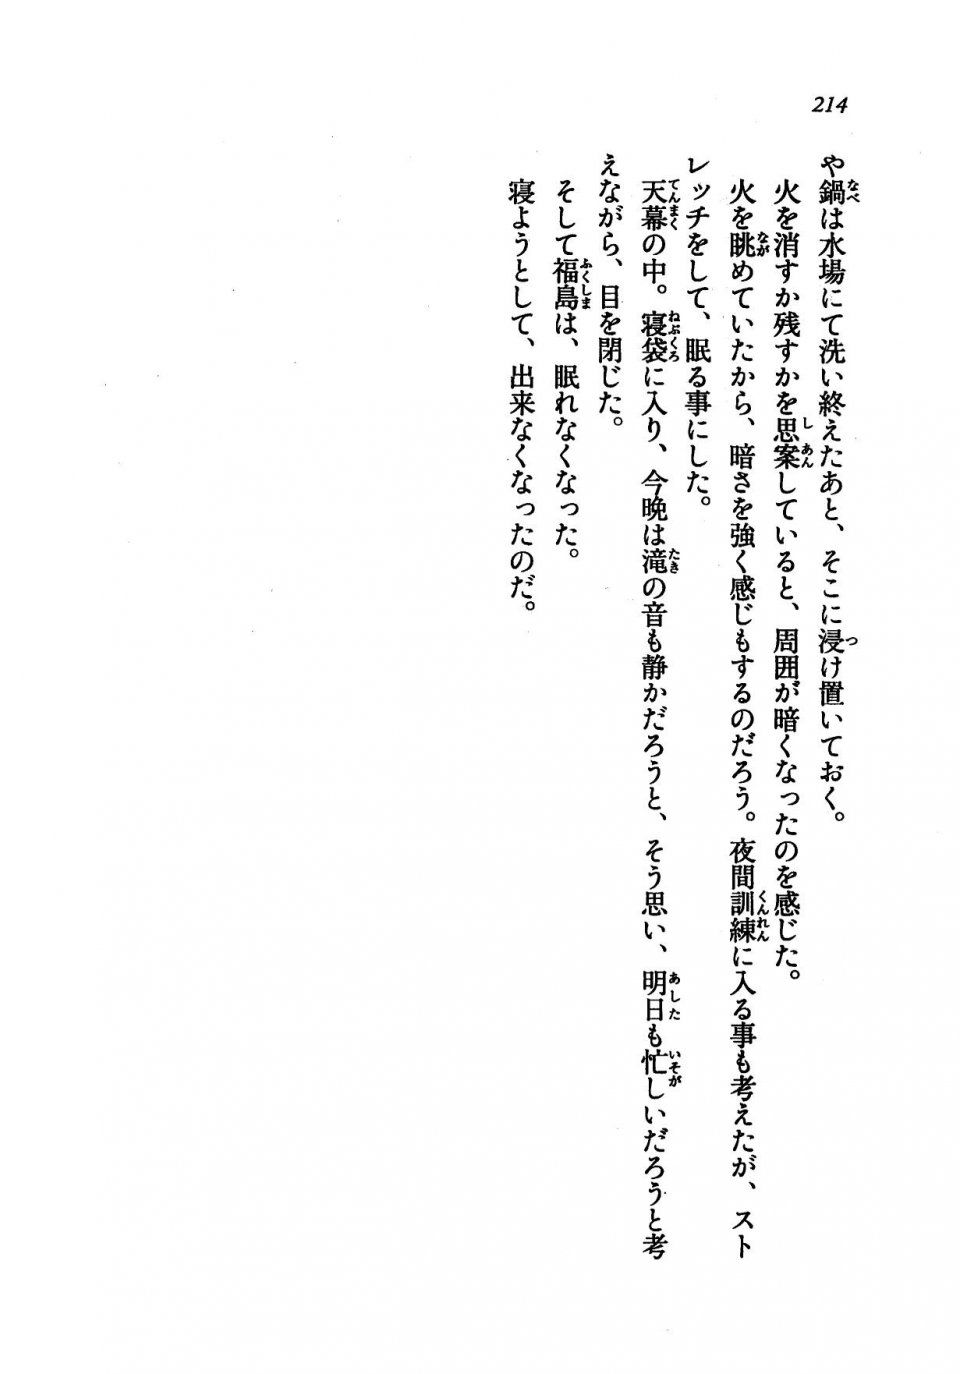 Kyoukai Senjou no Horizon LN Vol 21(8C) Part 1 - Photo #213